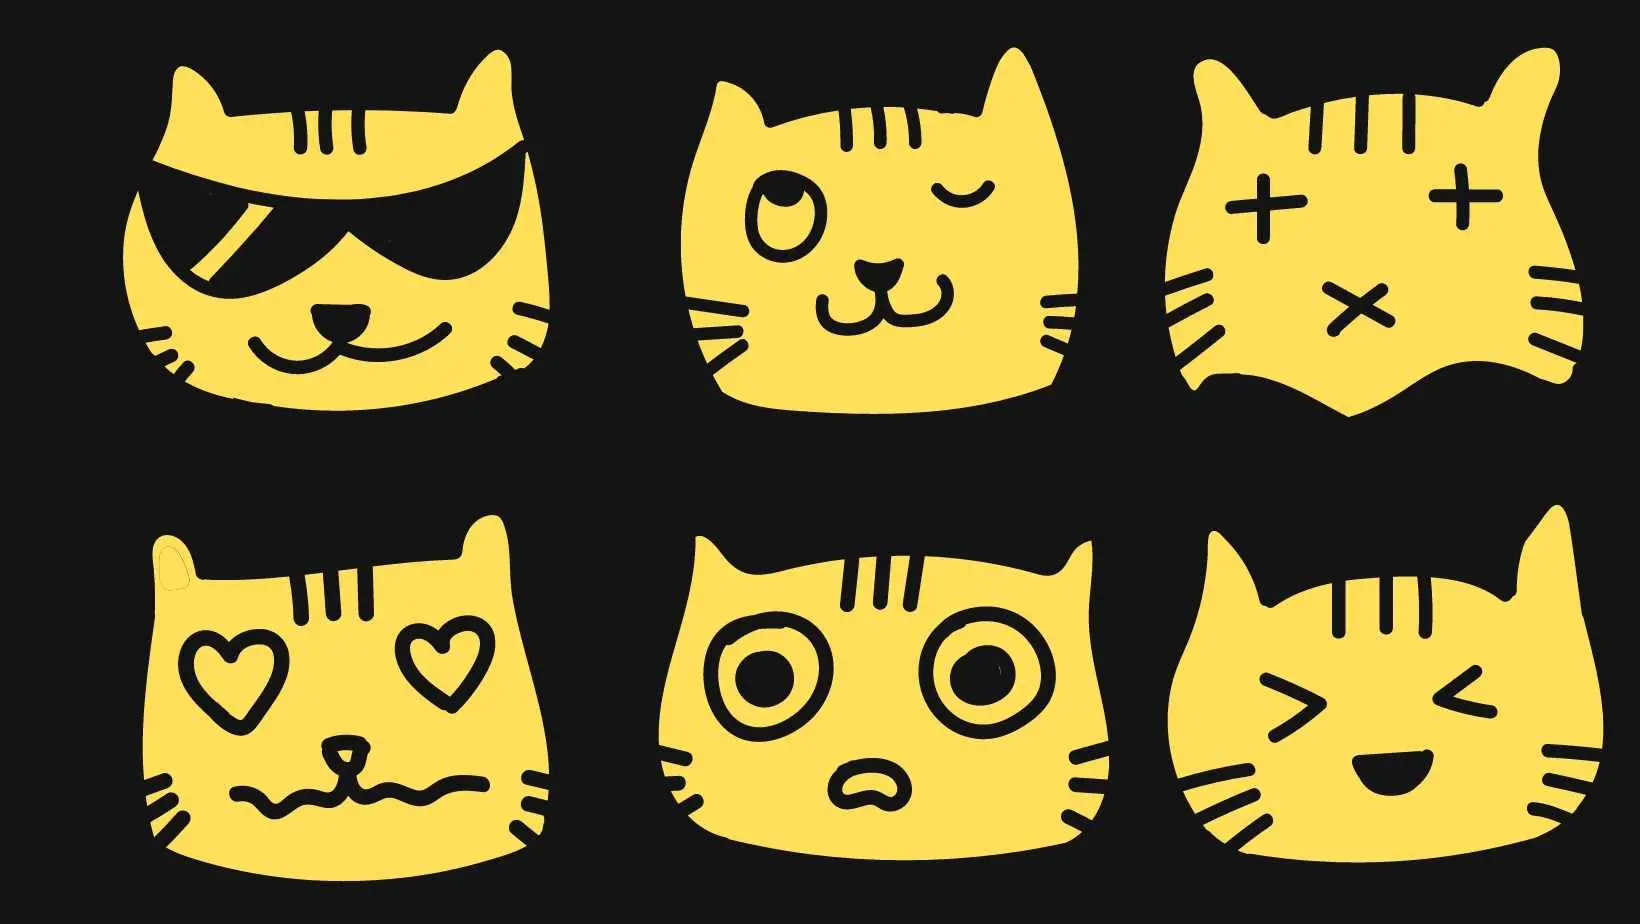 What does the cat emoji mean? Sweet cat emojis